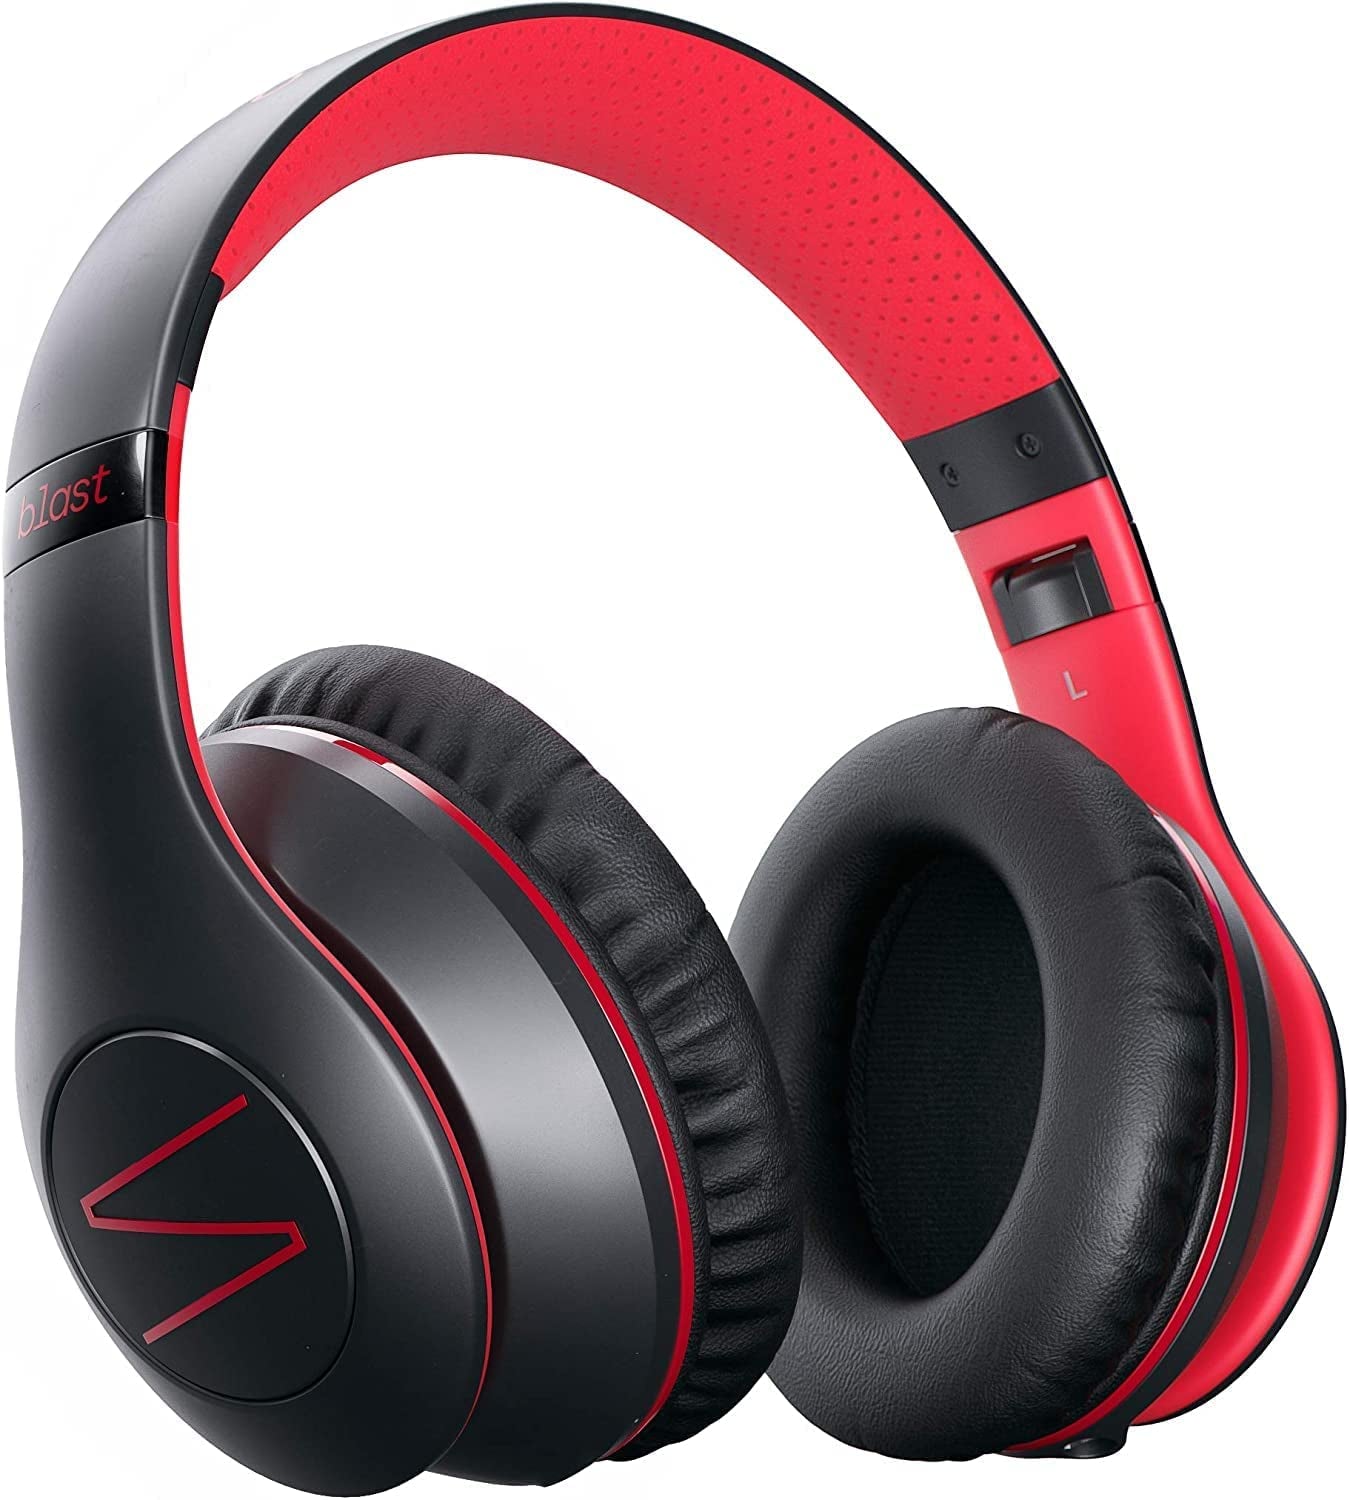 90% Noise Cancelling Wireless Headphones - Everyday-Sales.com